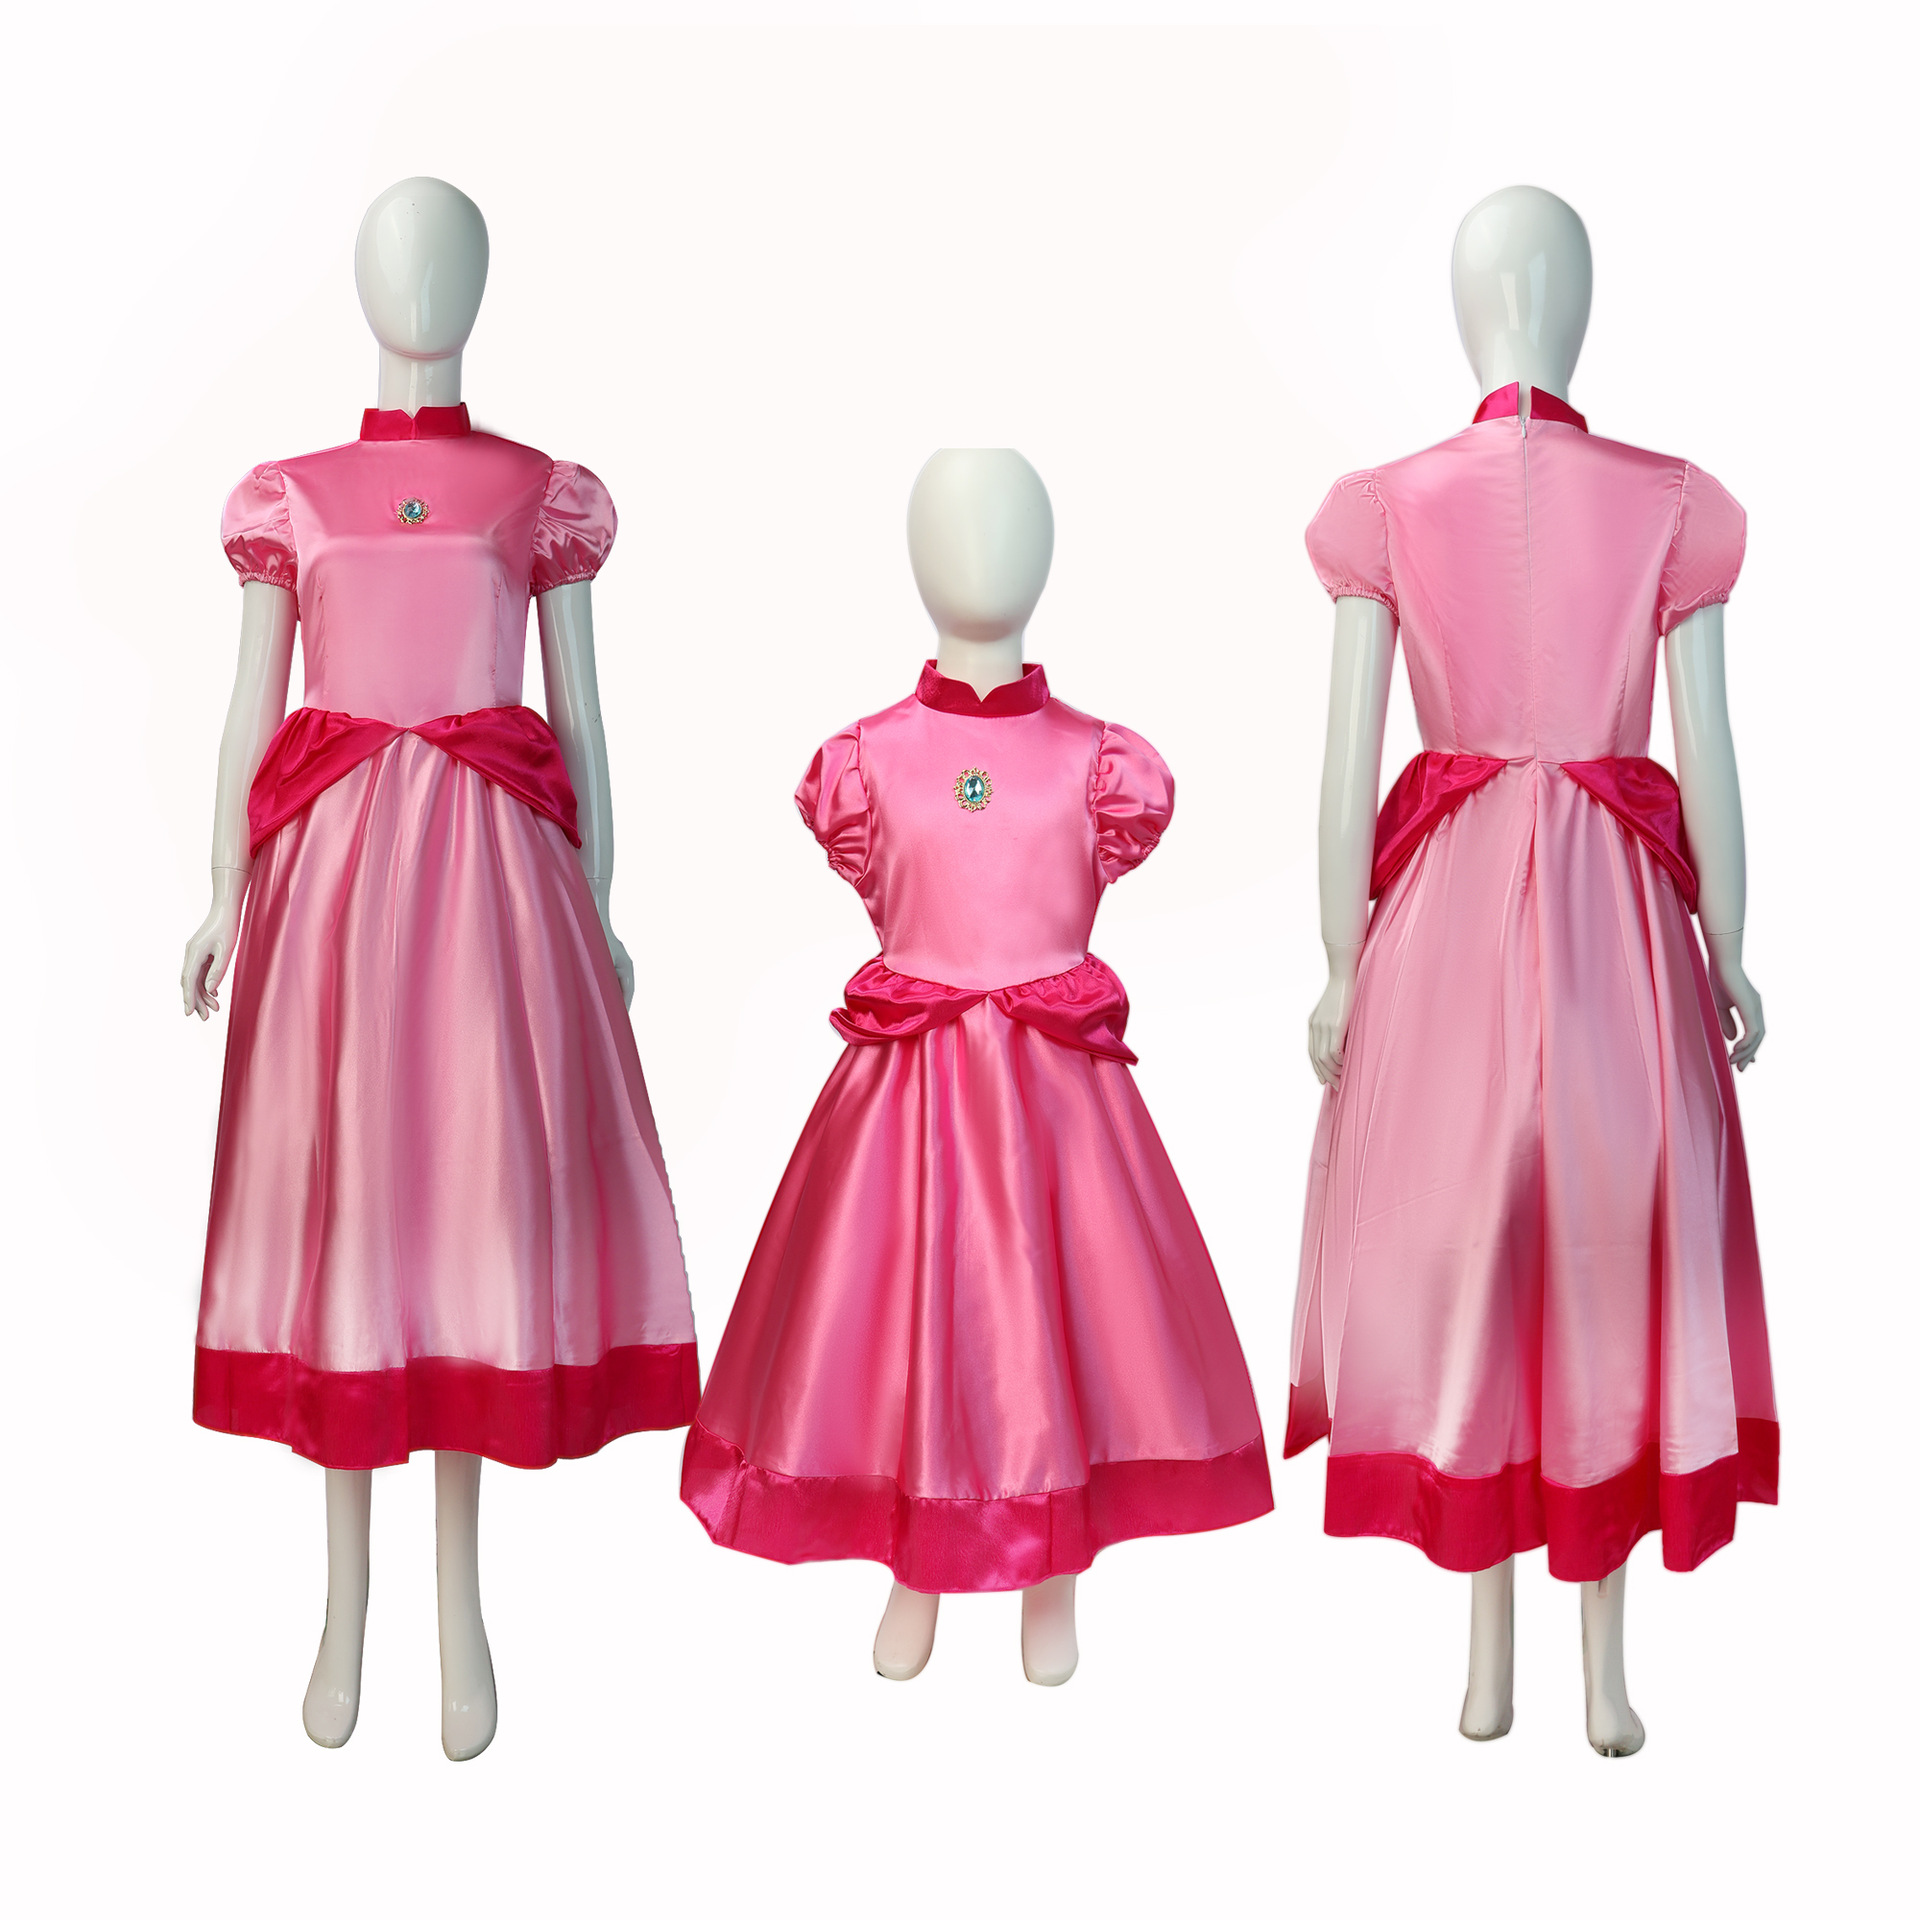 Super Mario Peach Princess Cosplay Costumes Pink Adult Children Dresses Crown 2PCS Suits